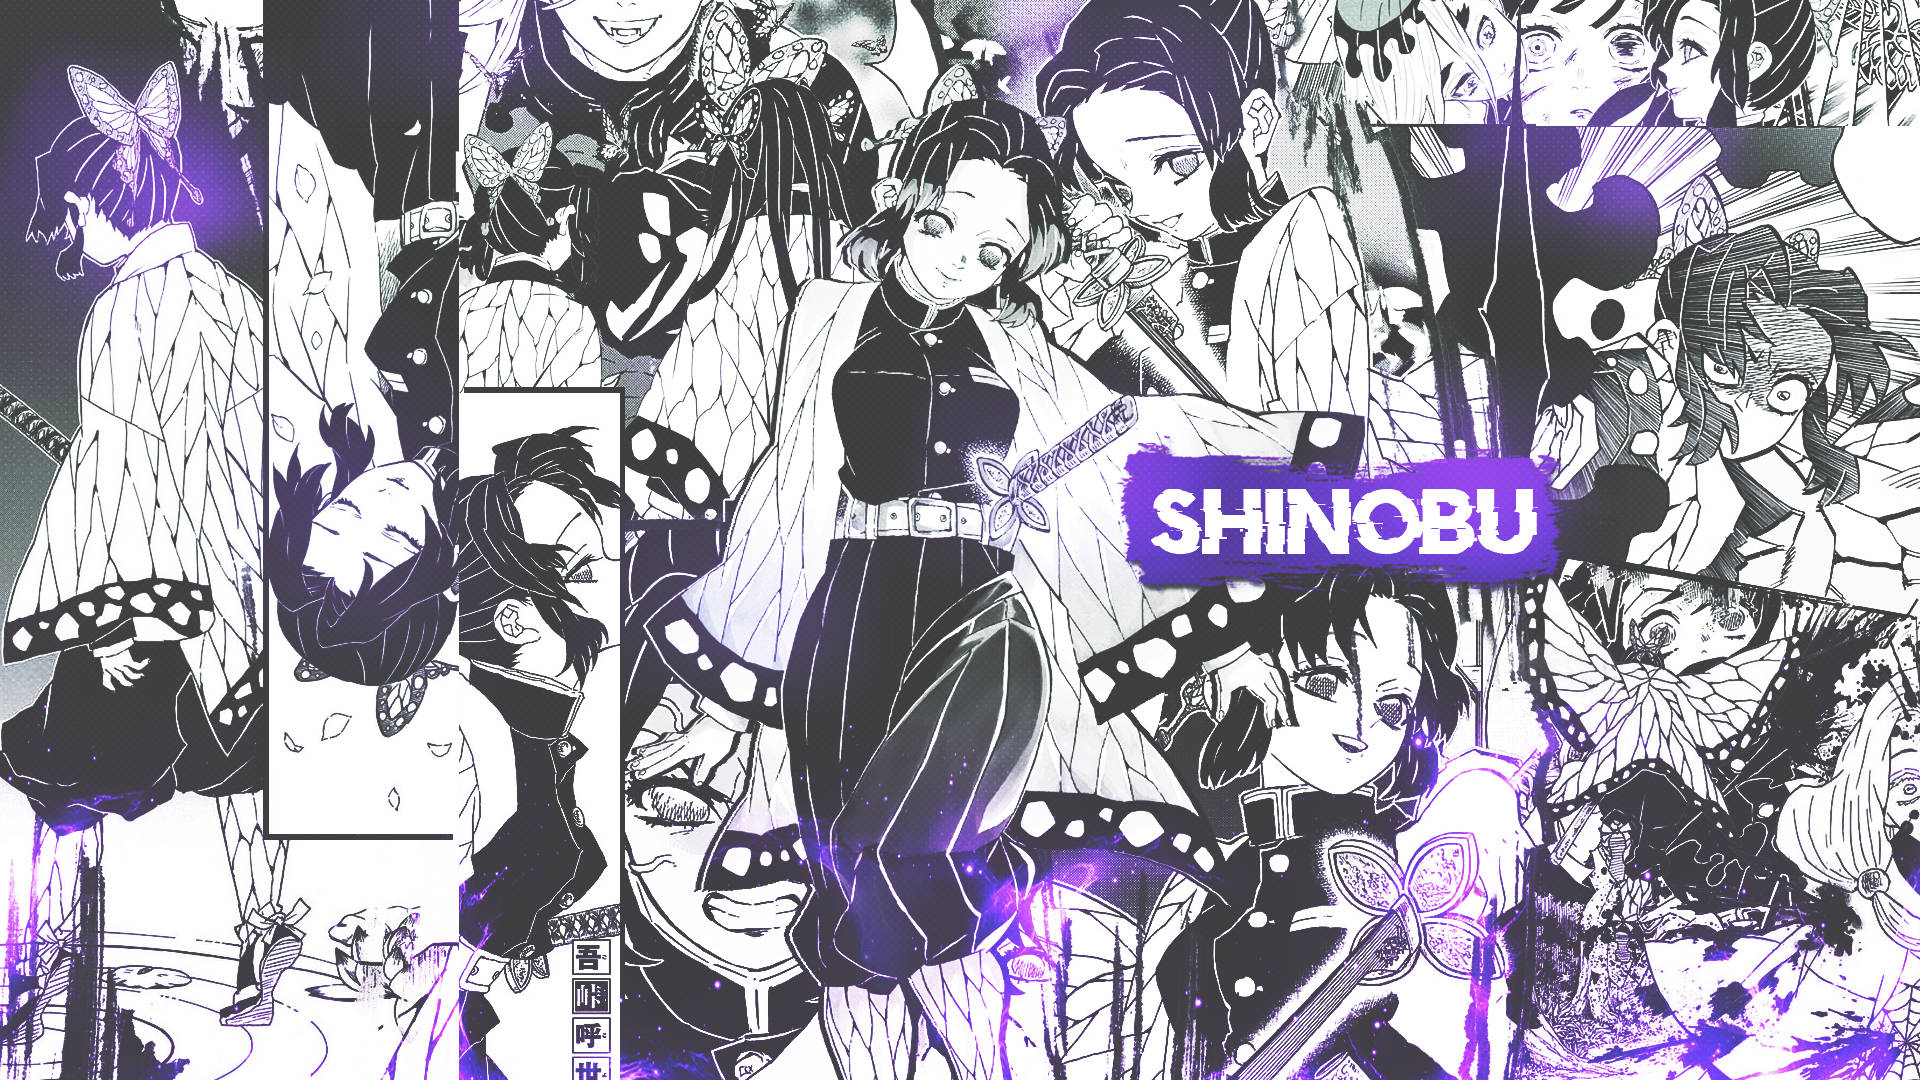 Shinobu Manga Art Collage Background